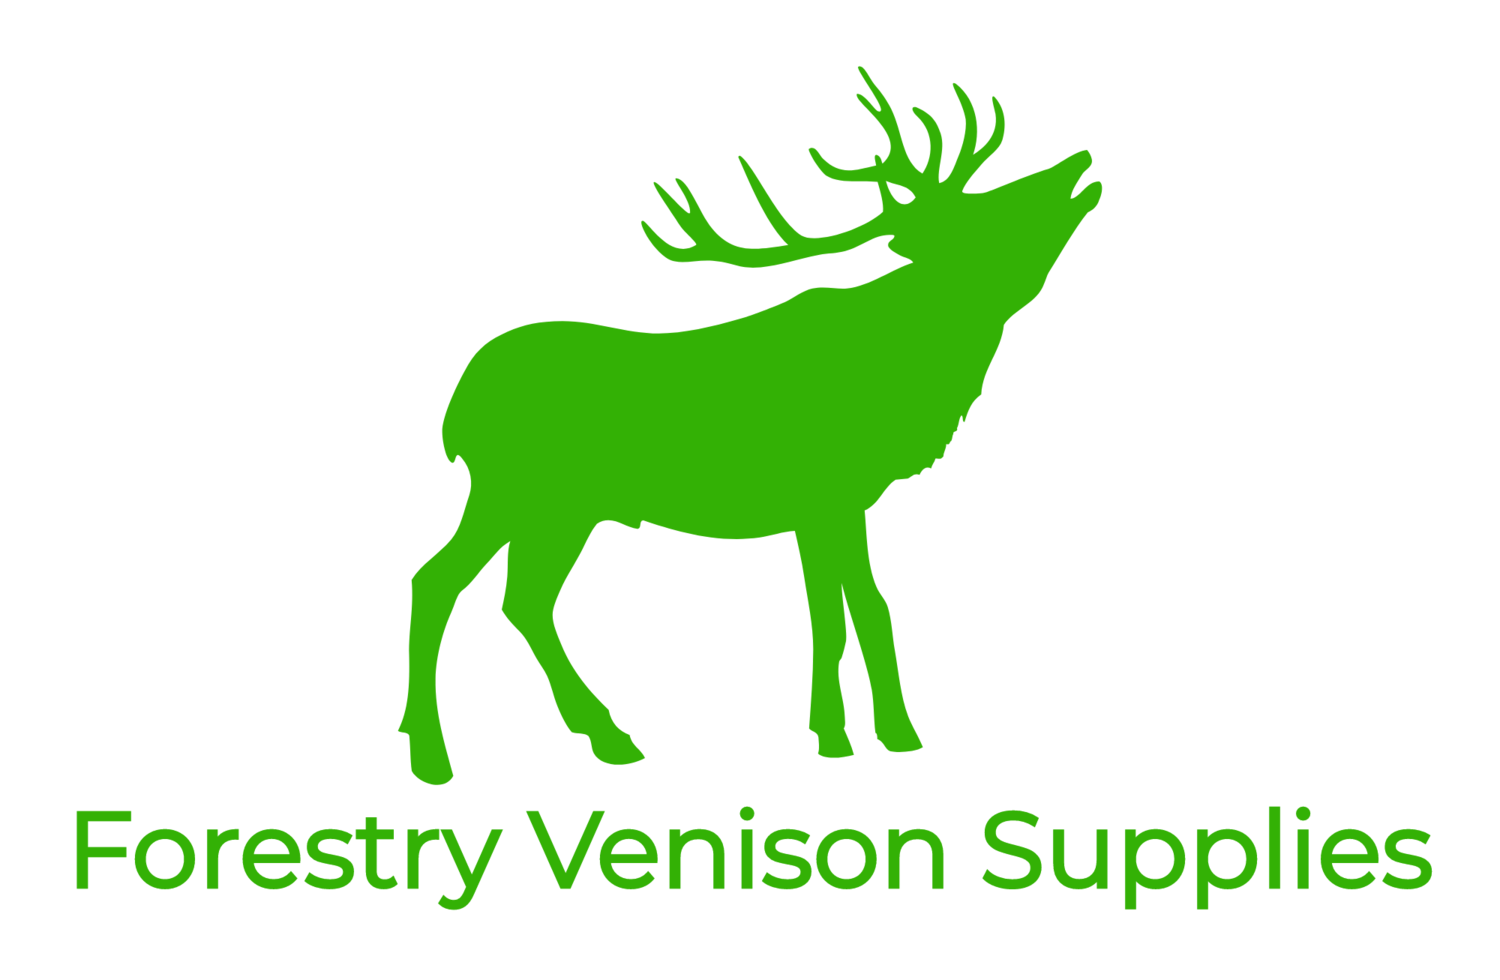 Deer clipart profile. Forestry venison supplies 